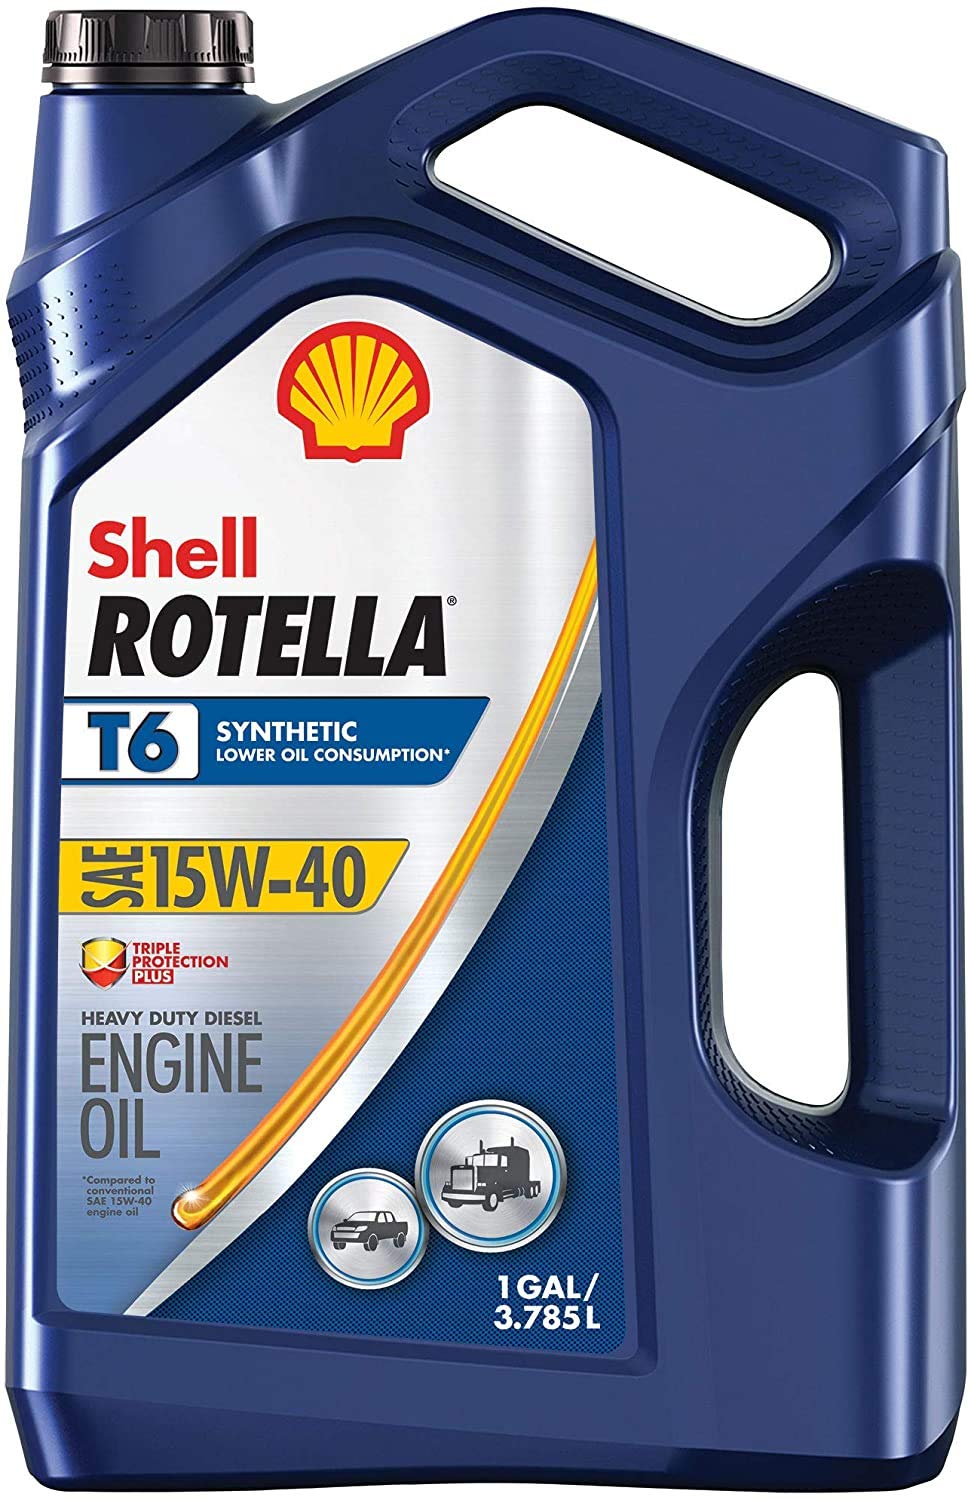 Shell Rotella Aceite de motor diésel completamente sint...